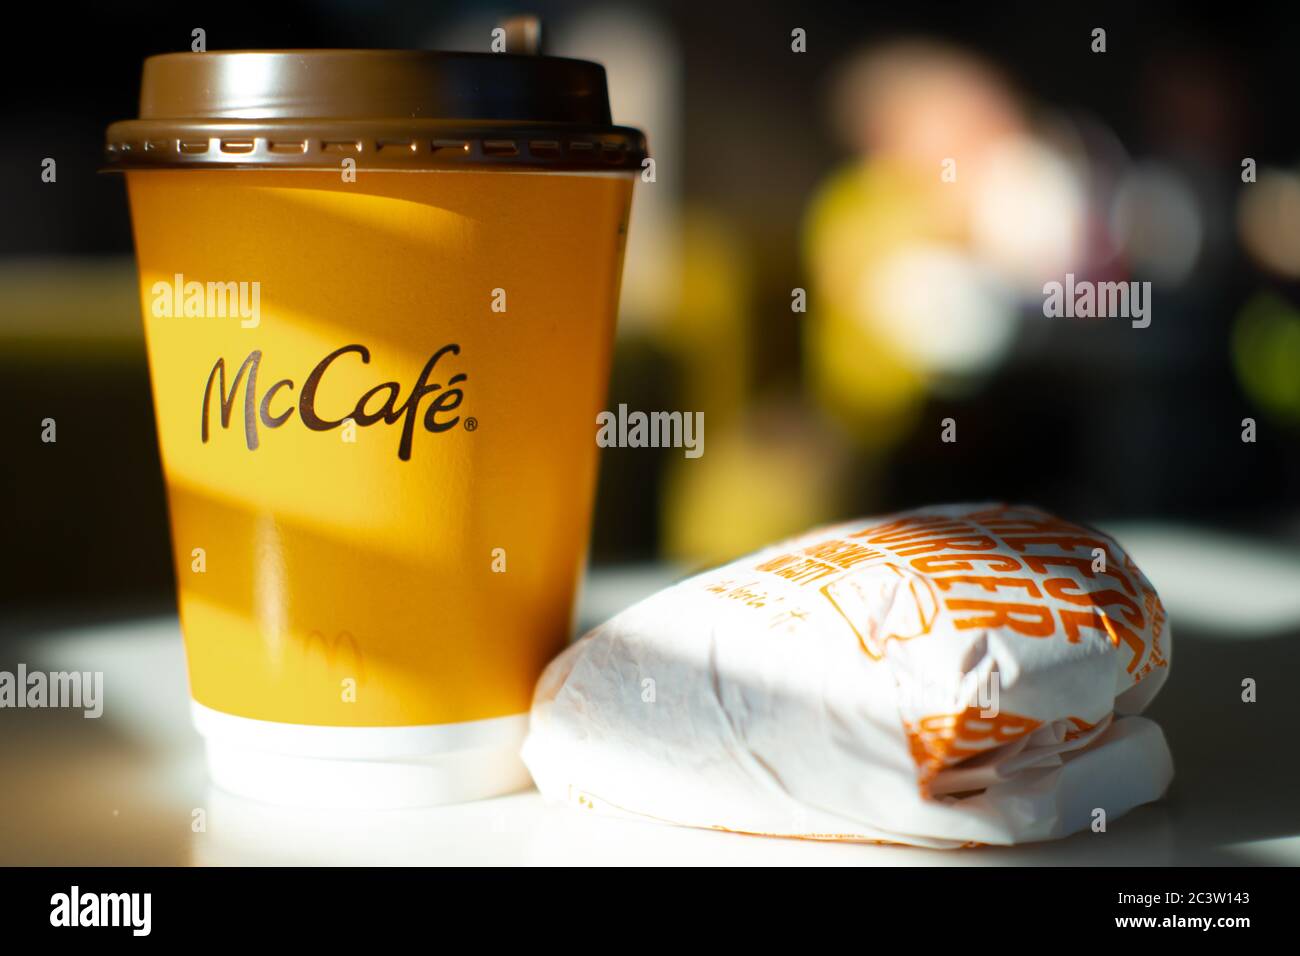 Mc cafe menü -Fotos und -Bildmaterial in hoher Auflösung – Alamy